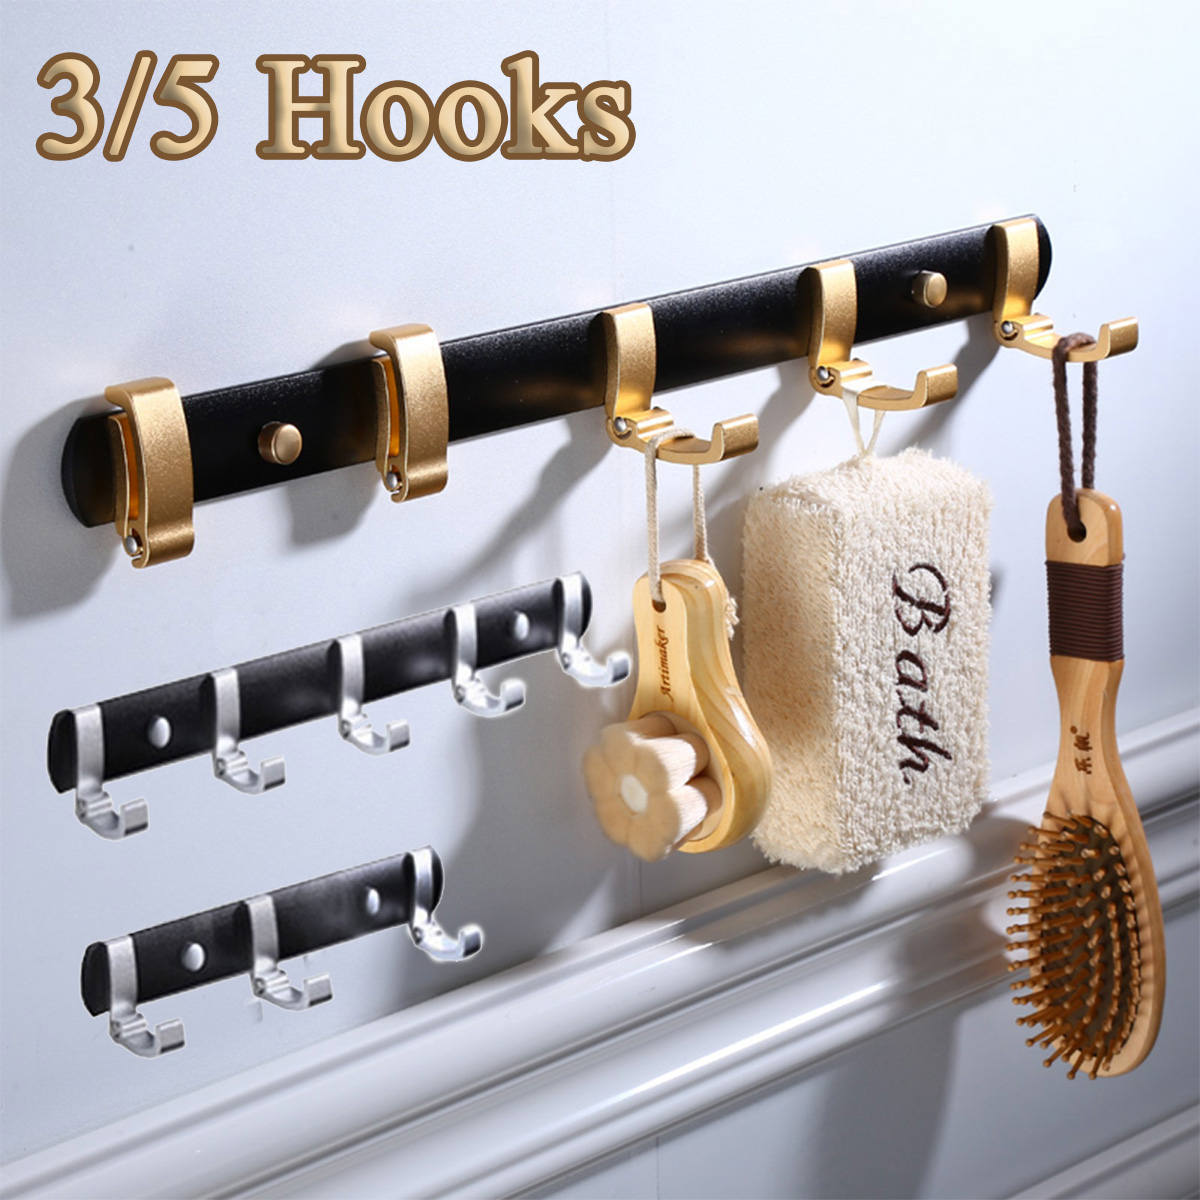 Wall-Mounted-Hook-Rack-Foldable-Hooks-Hangers-Home-Clothes-Coats-Organizer-Rack-1806921-1